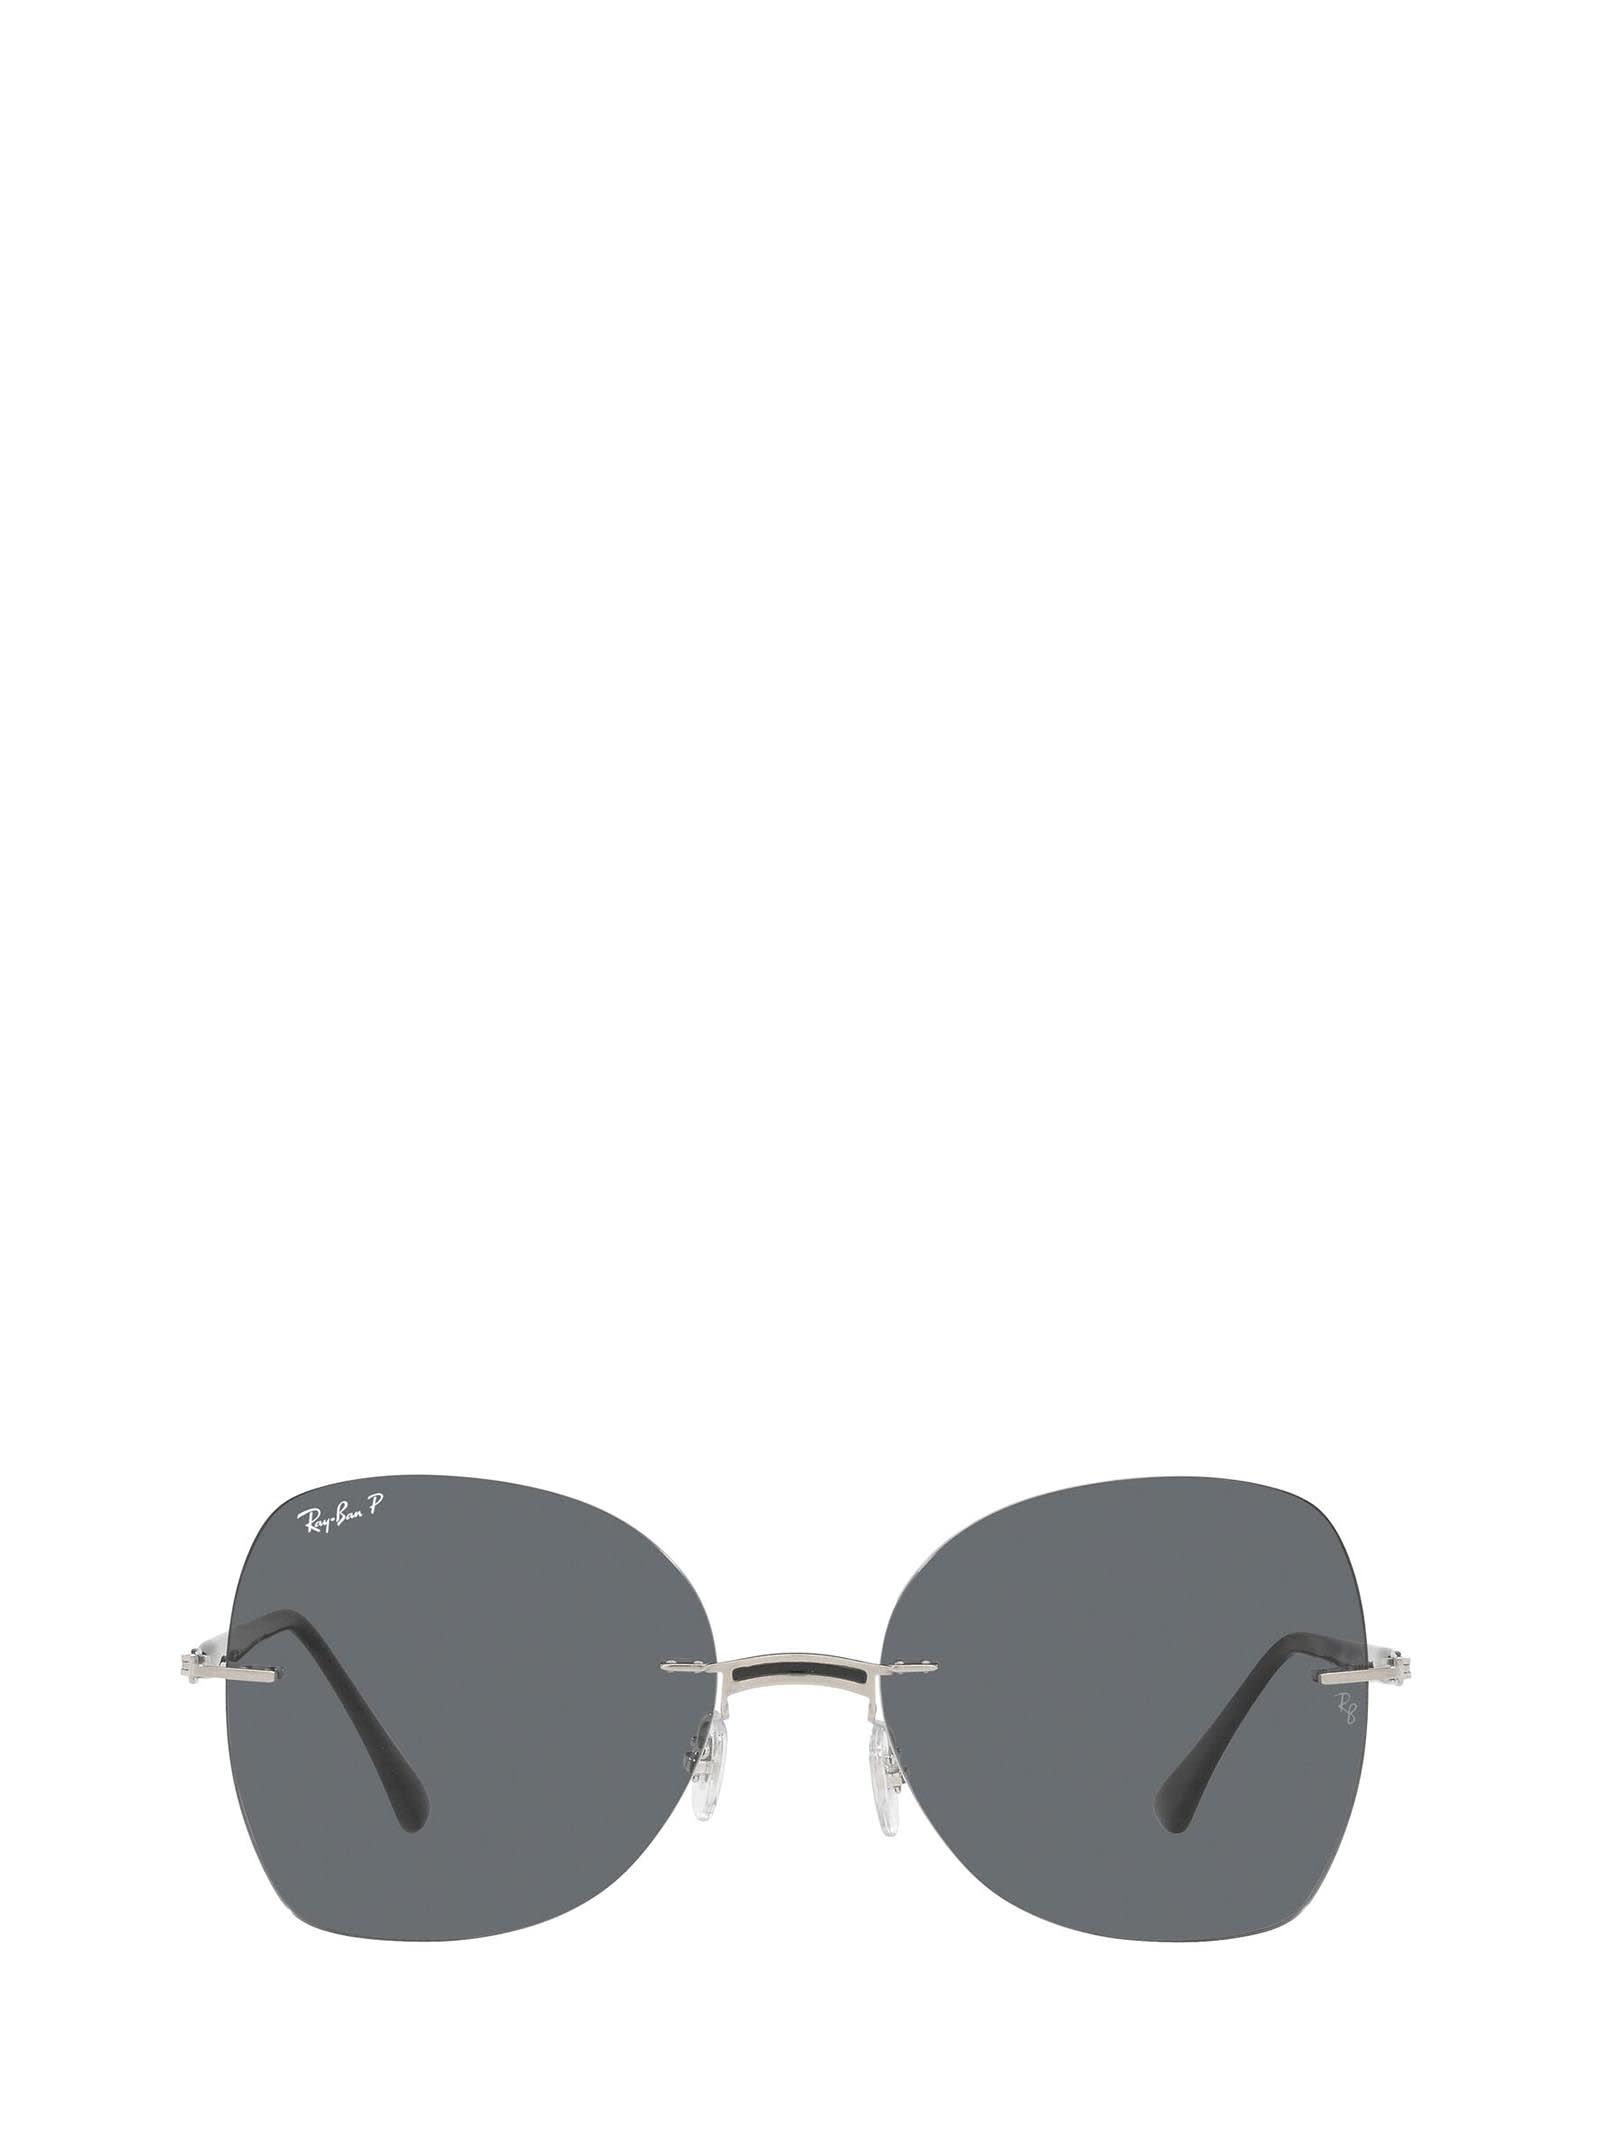 Ray-Ban Ray-ban Rb8066 Black On Silver Sunglasses